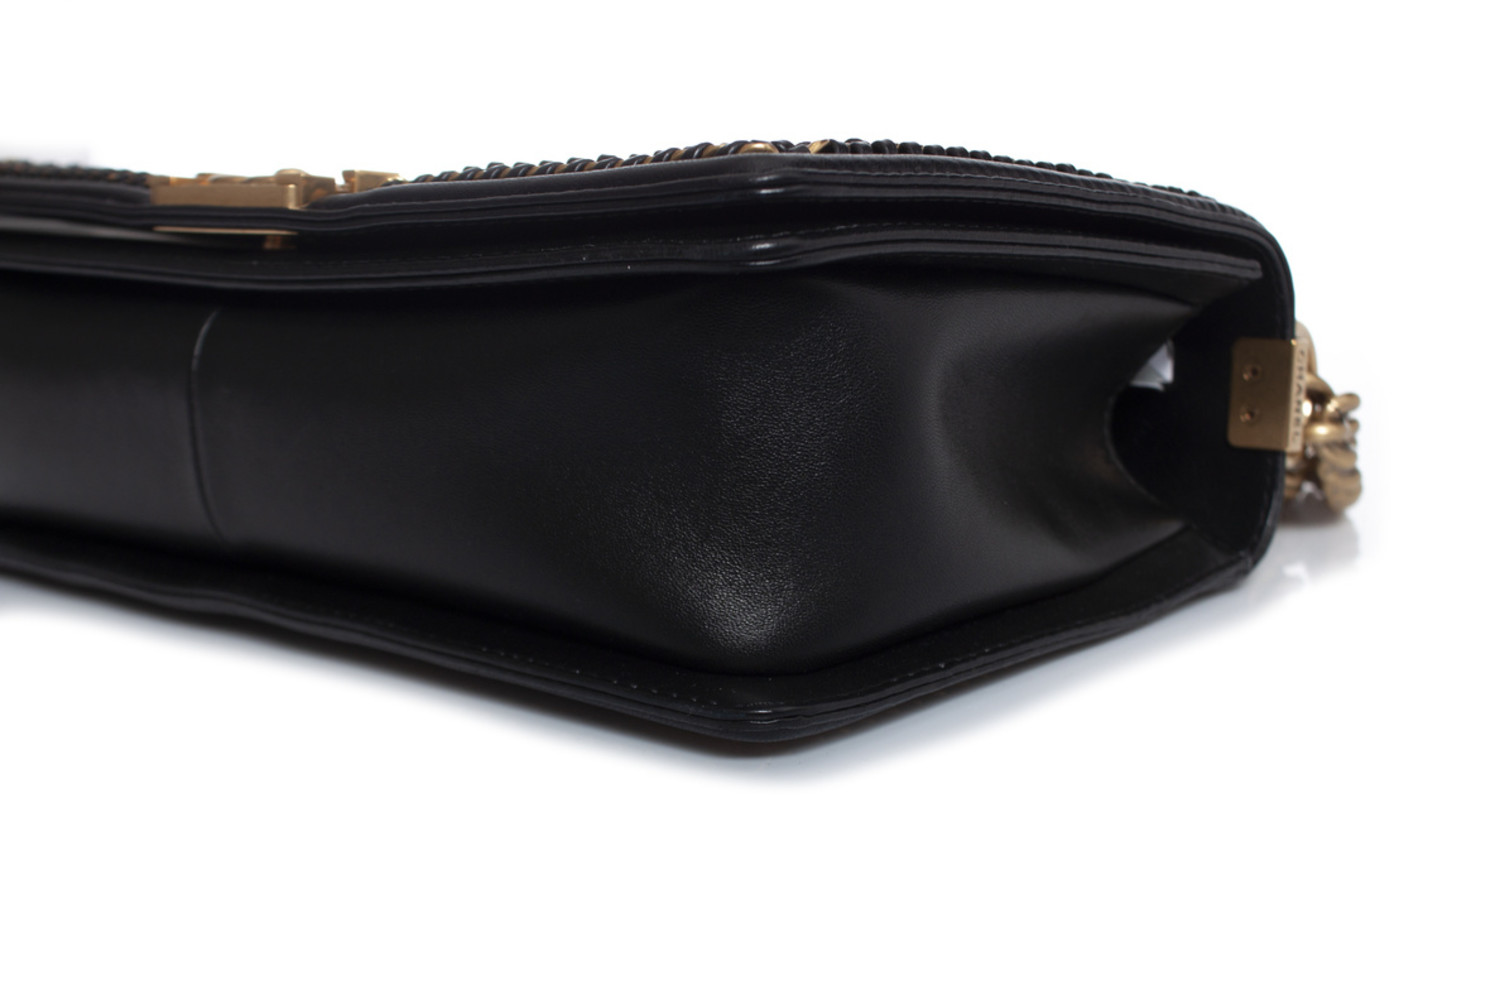 Chanel, Black python top handle leather boy bag - Unique Designer